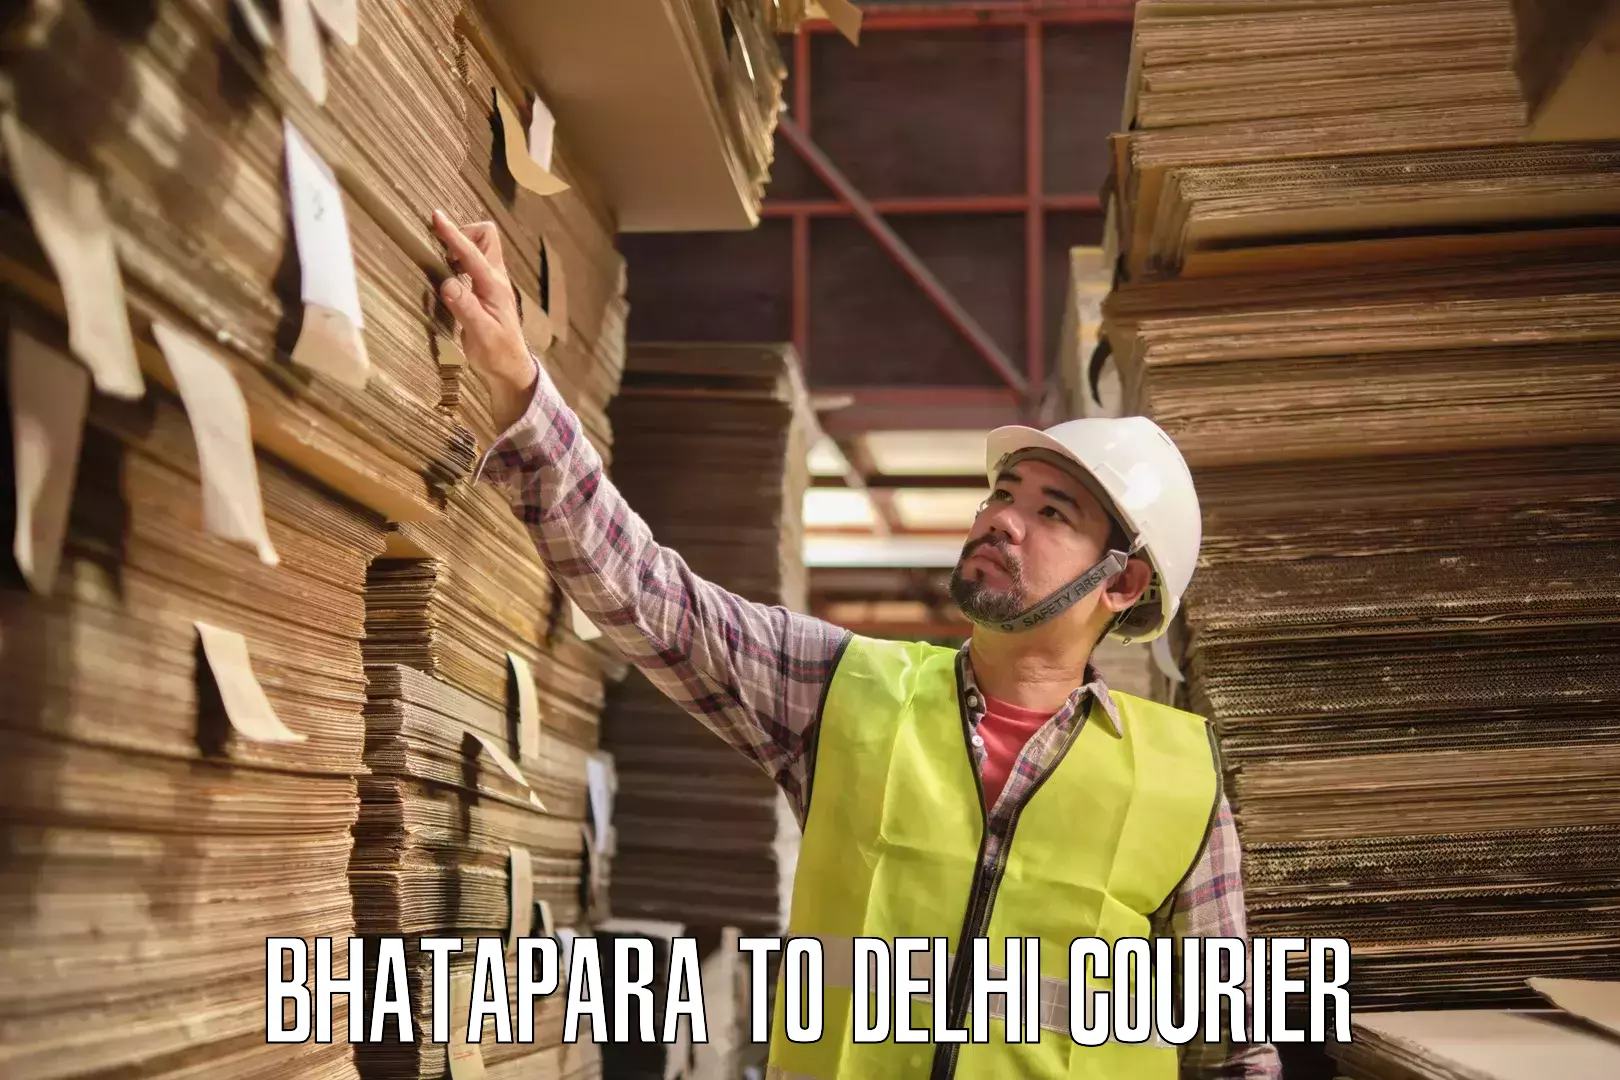 Seamless shipping experience Bhatapara to Lodhi Road